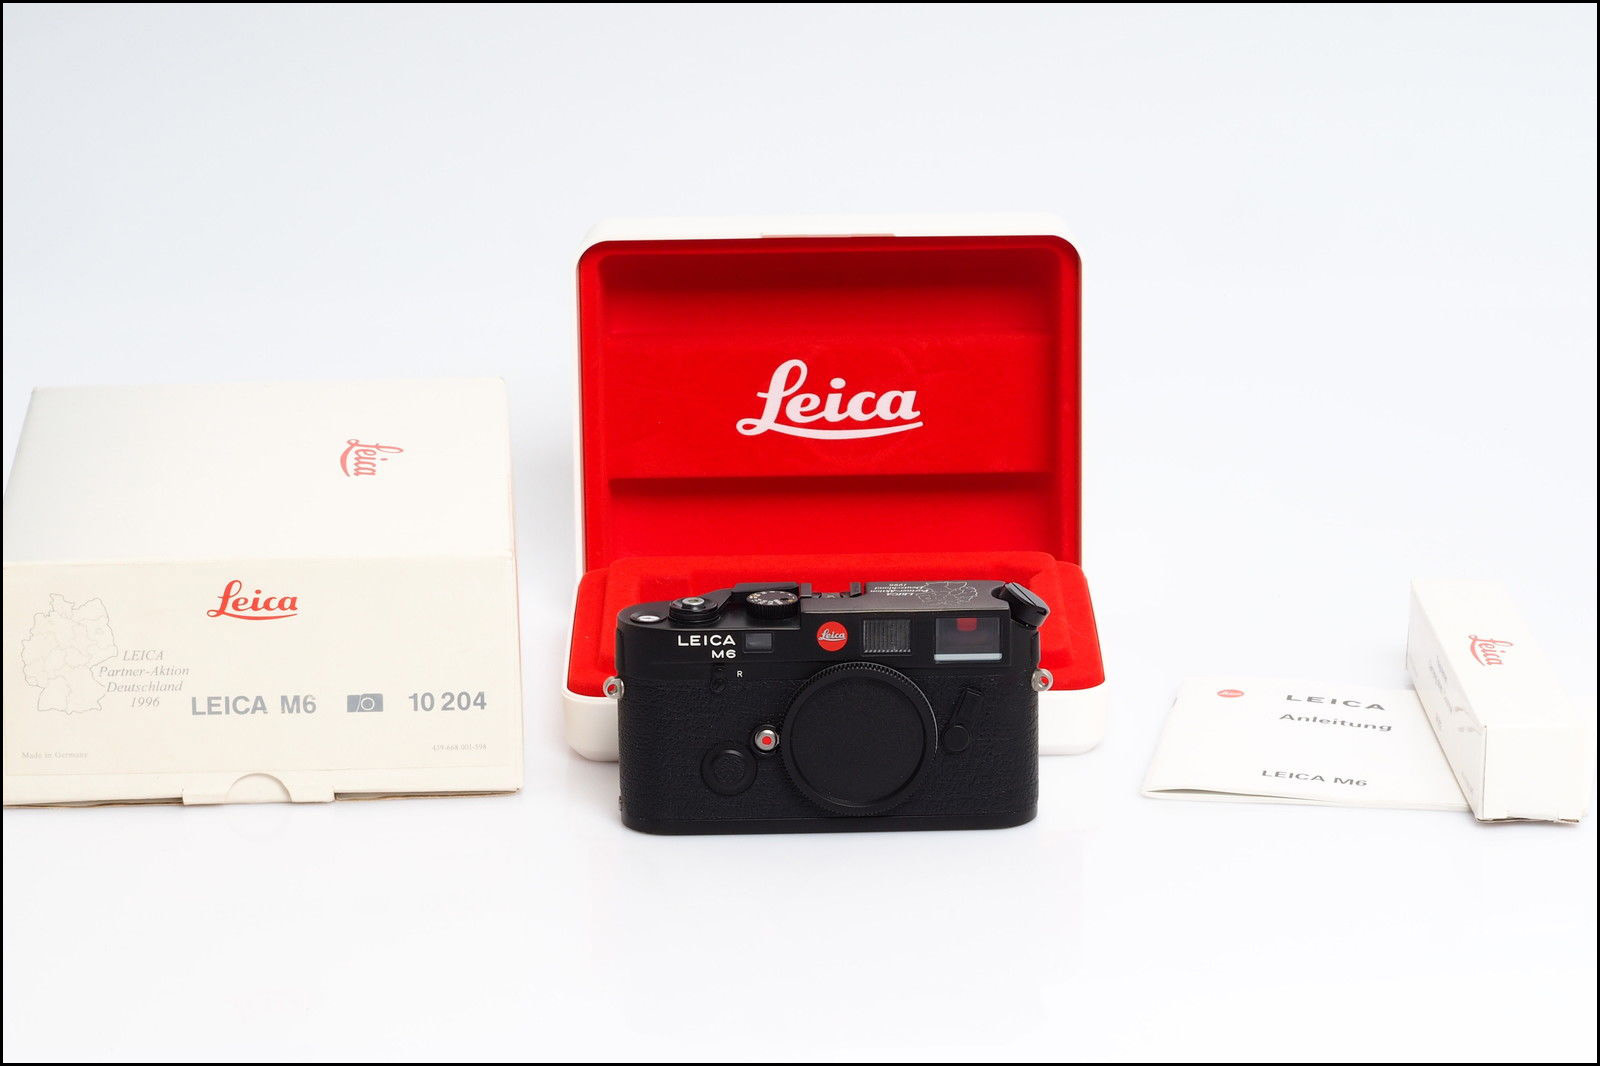 徕卡 Leica M6 Partner-Aktion Deutsschland 1996 带包装